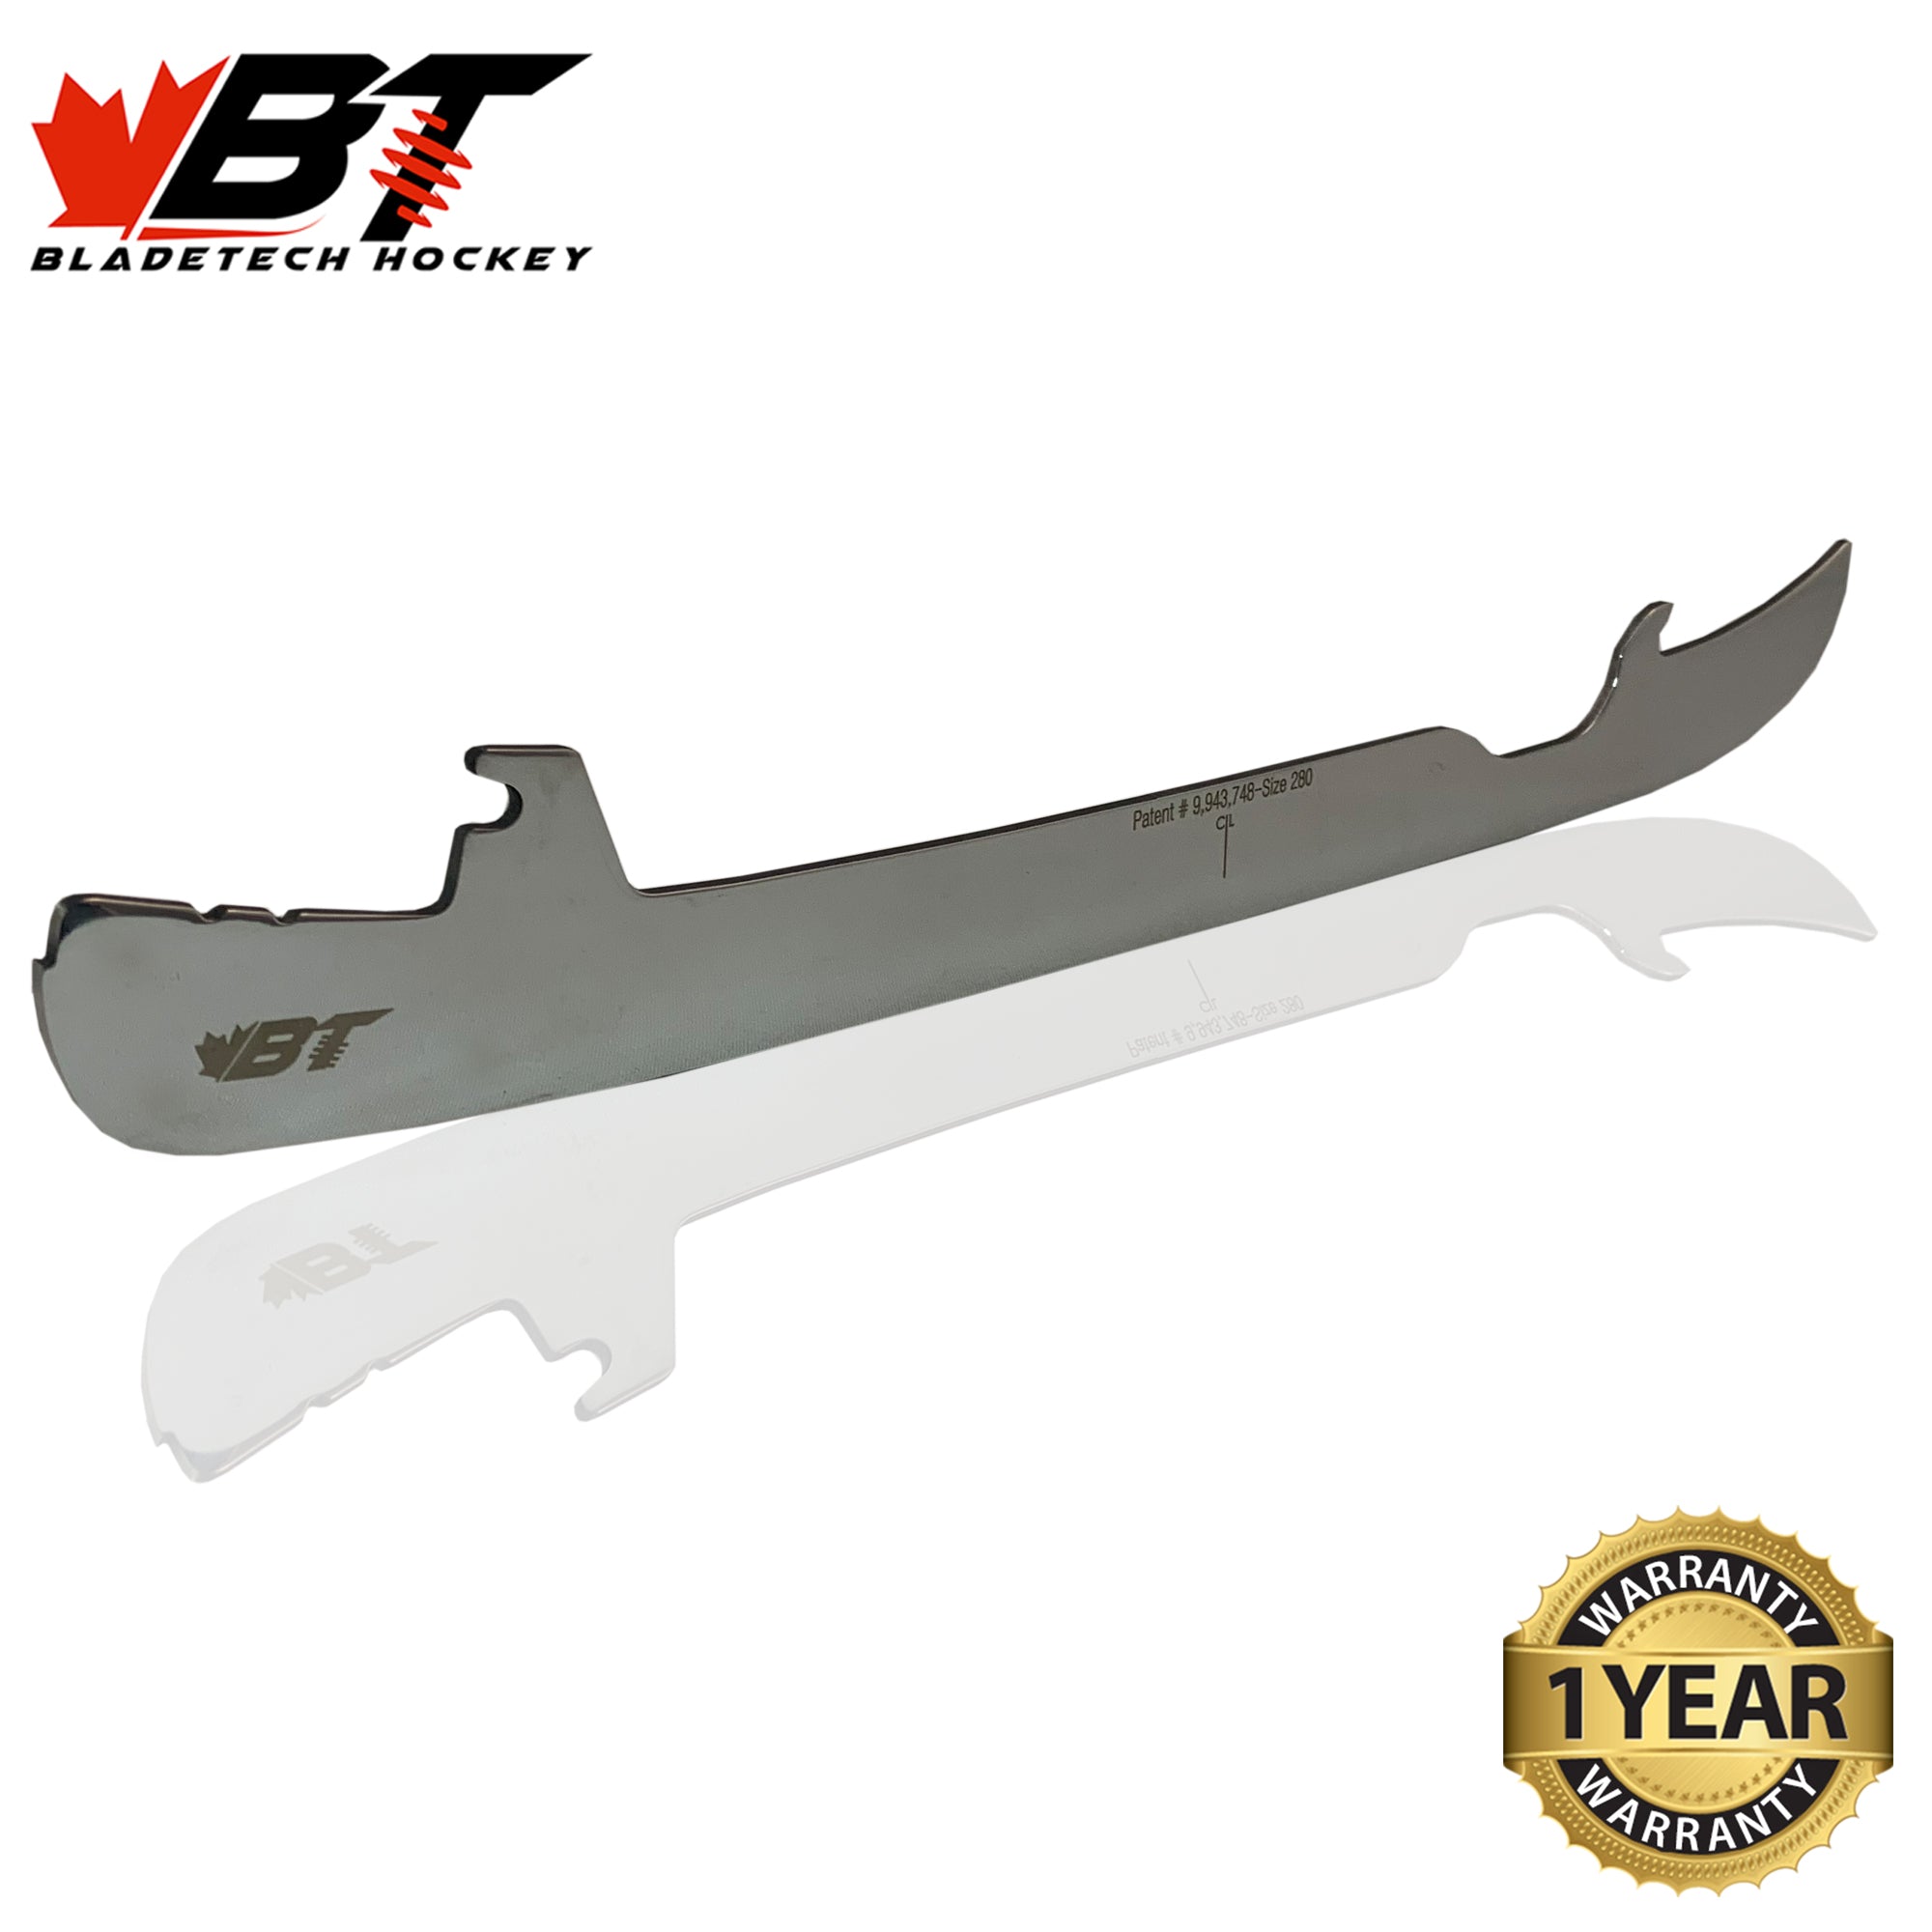 Bladetech Mirror Stainless Steel Blades - SB XS - Tydan Specialty Blades Inc. (USA)